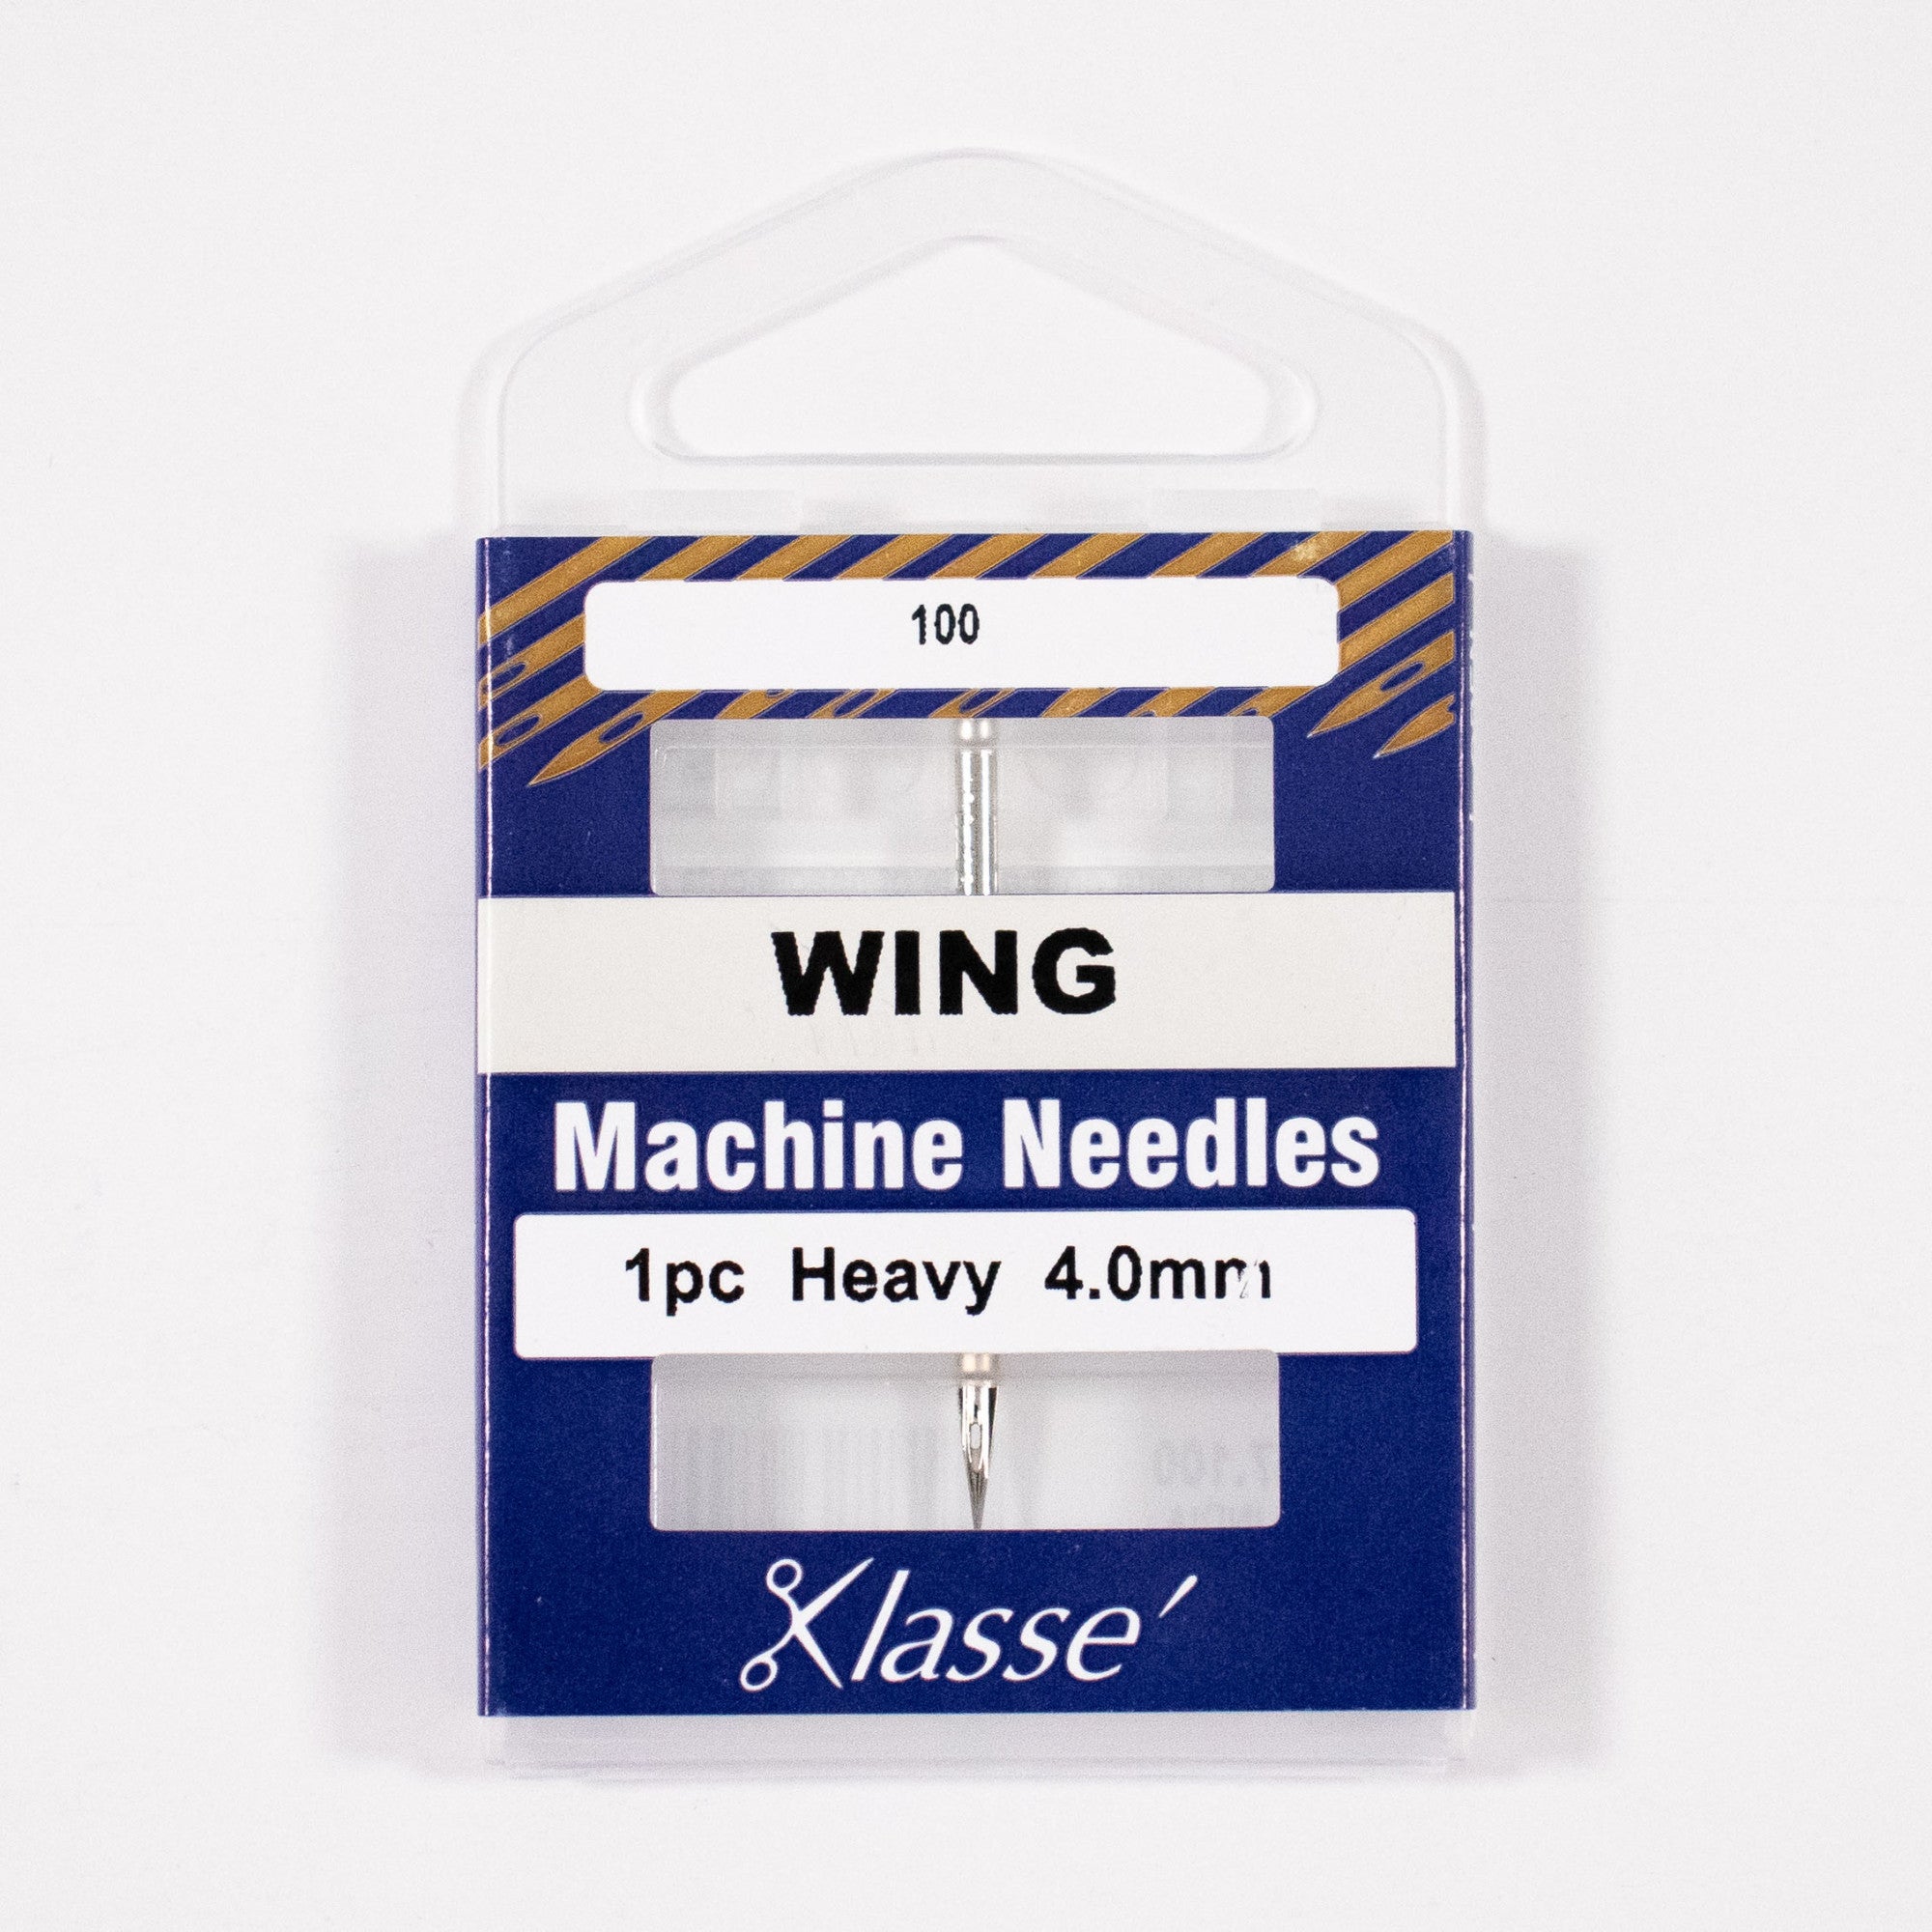 Wing/Hemstitch Needle 4.0mm wide, Size 100/16, Pkg.1